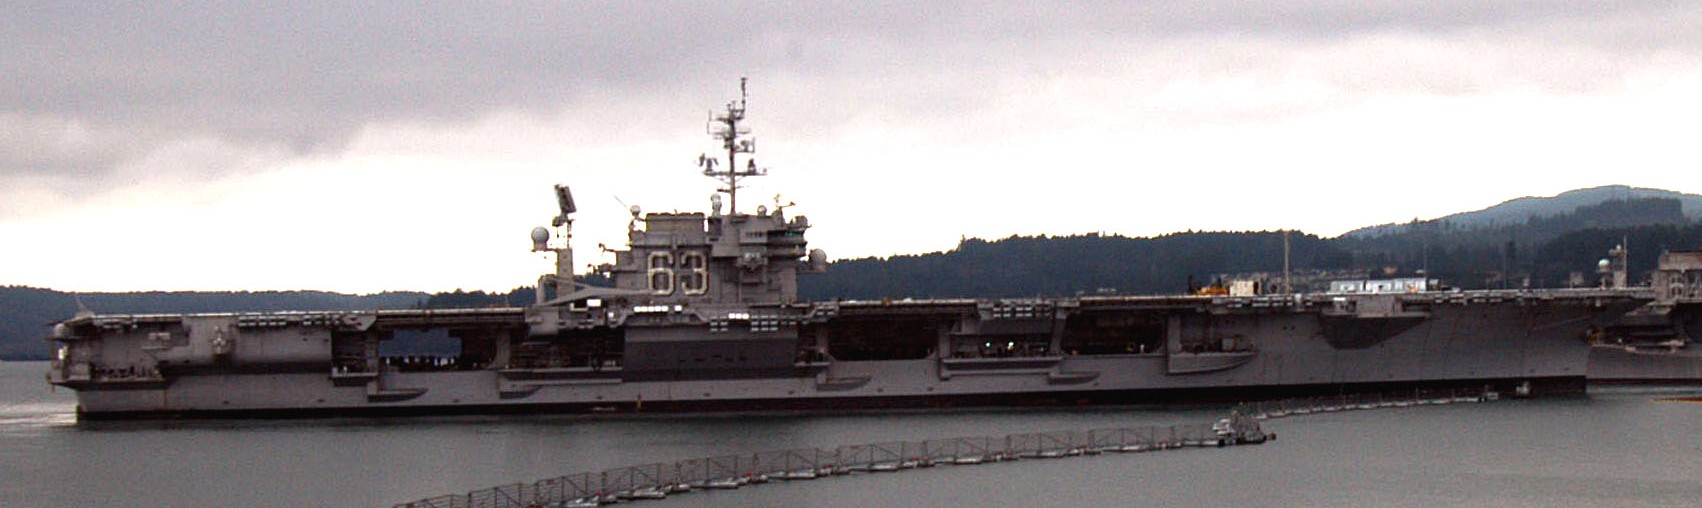 cv-63 uss kitty hawk aircraft carrier us navy puget sound naval shipyard washington 02